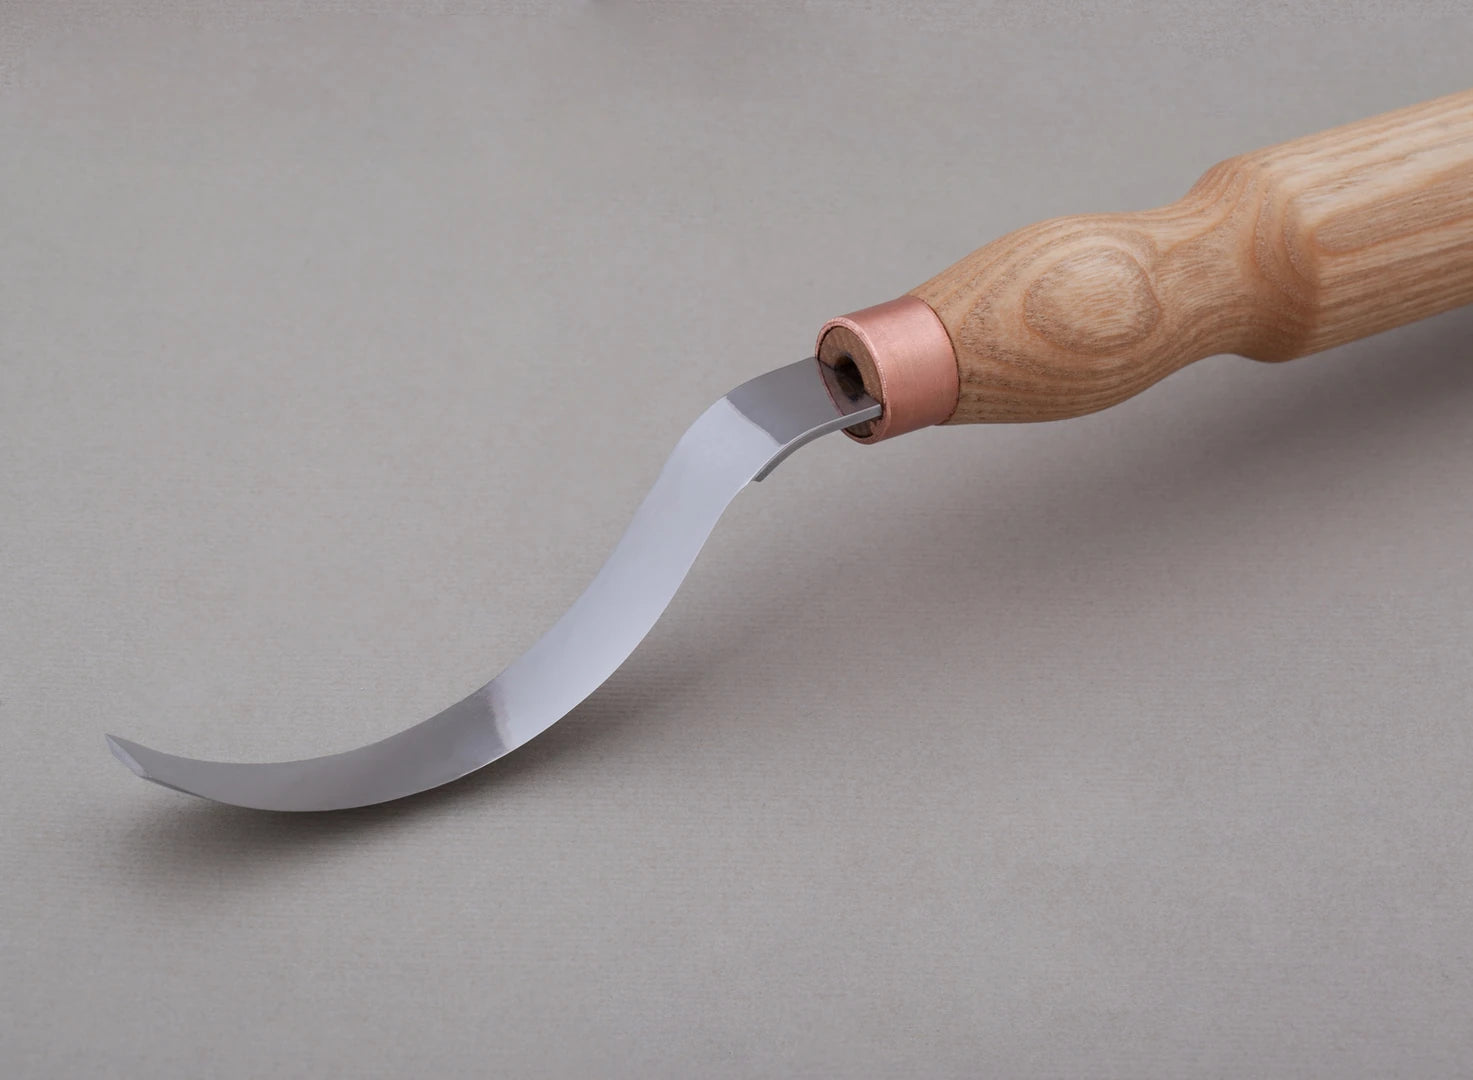 Long handled spoon carving knife for sale - BeaverCraft – BeaverCraft Tools